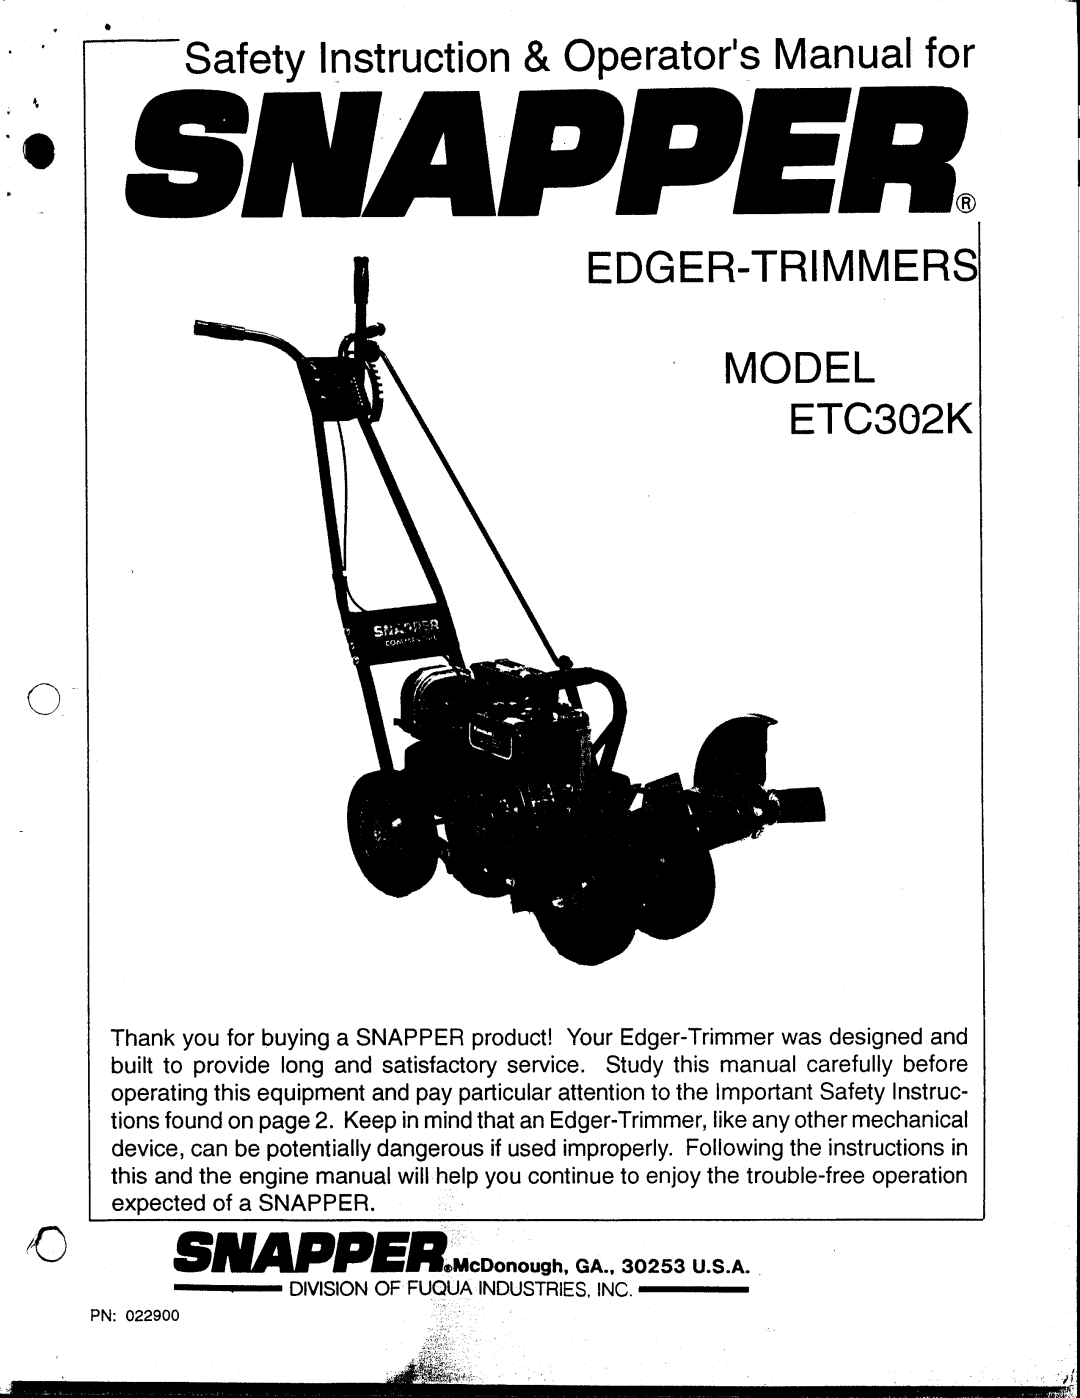 Snapper ETC302K manual 